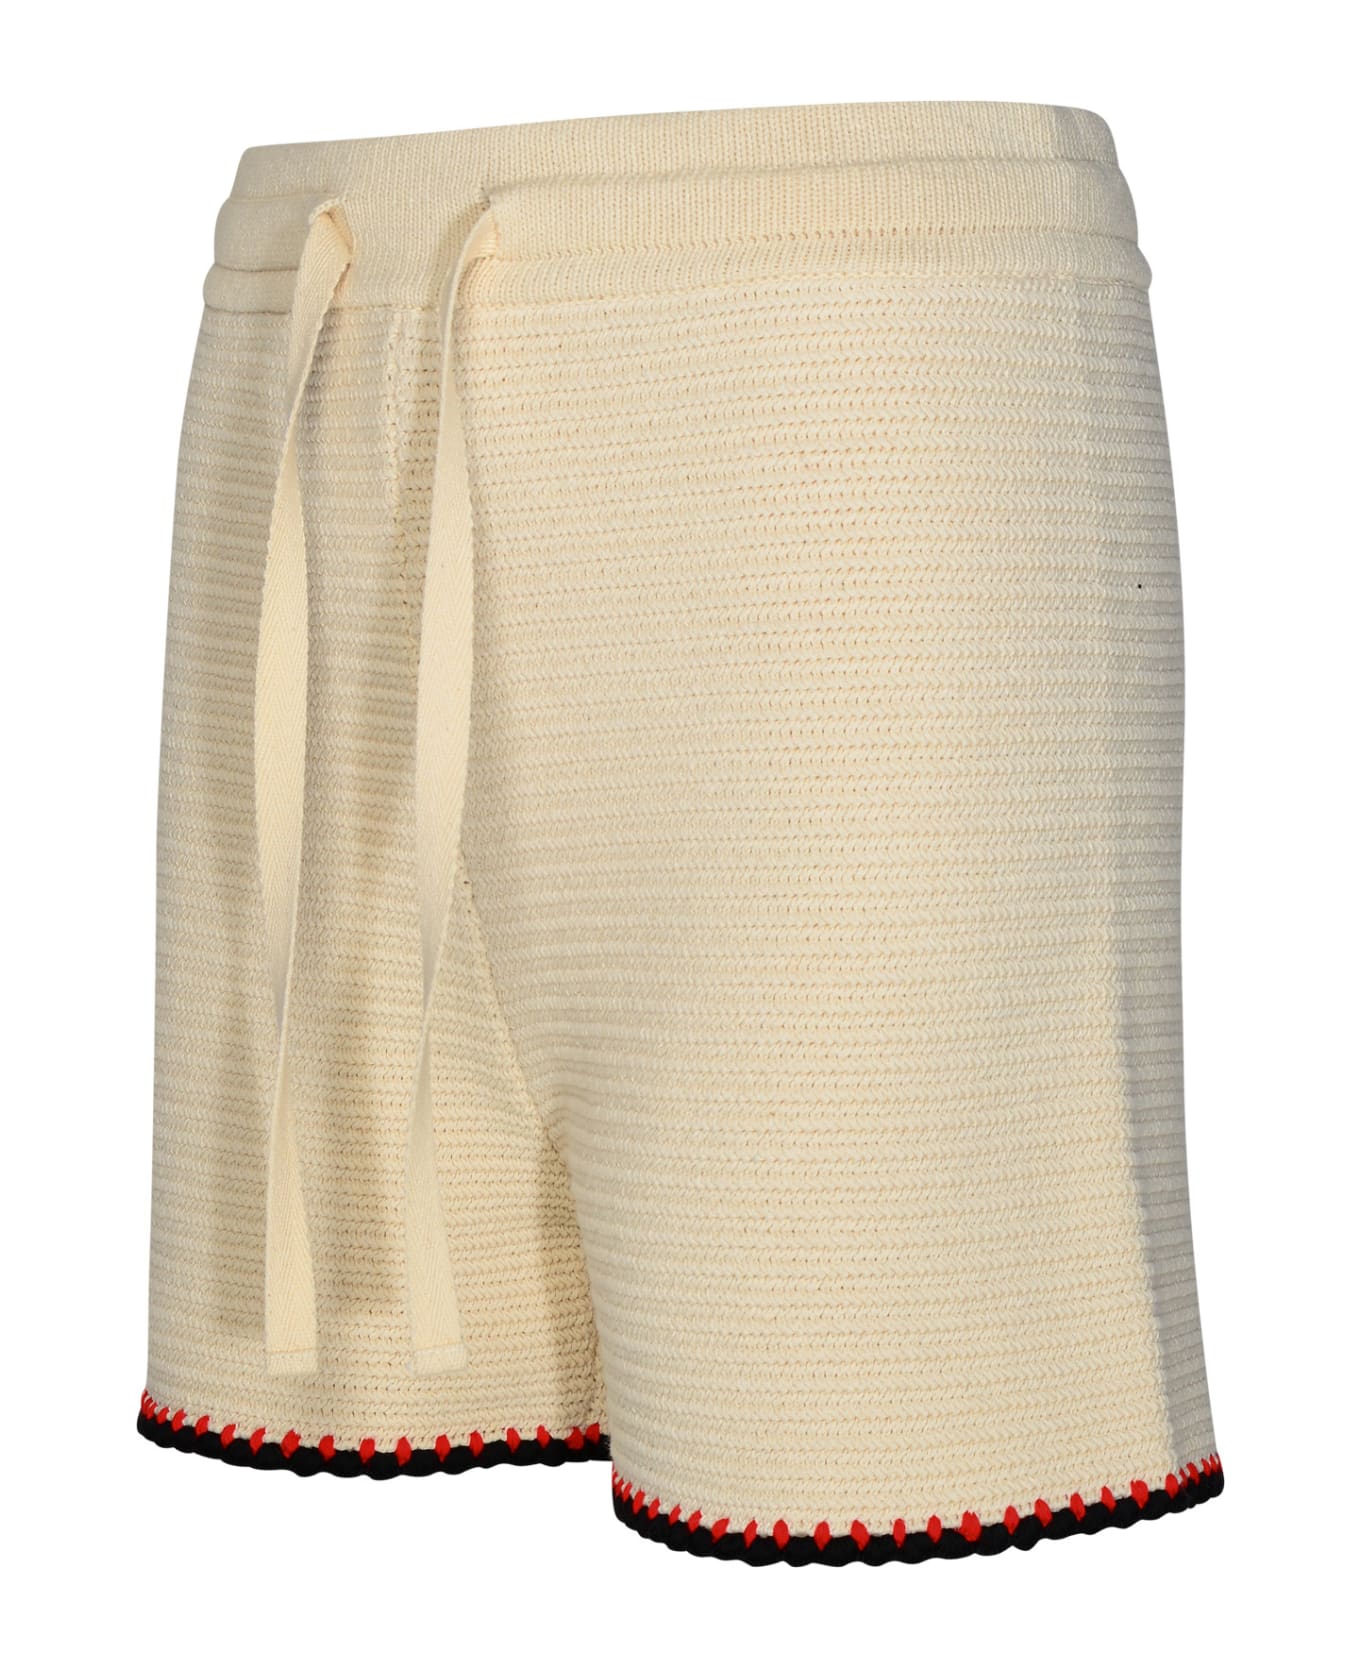 Jil Sander Cream Cotton Shorts - Cream